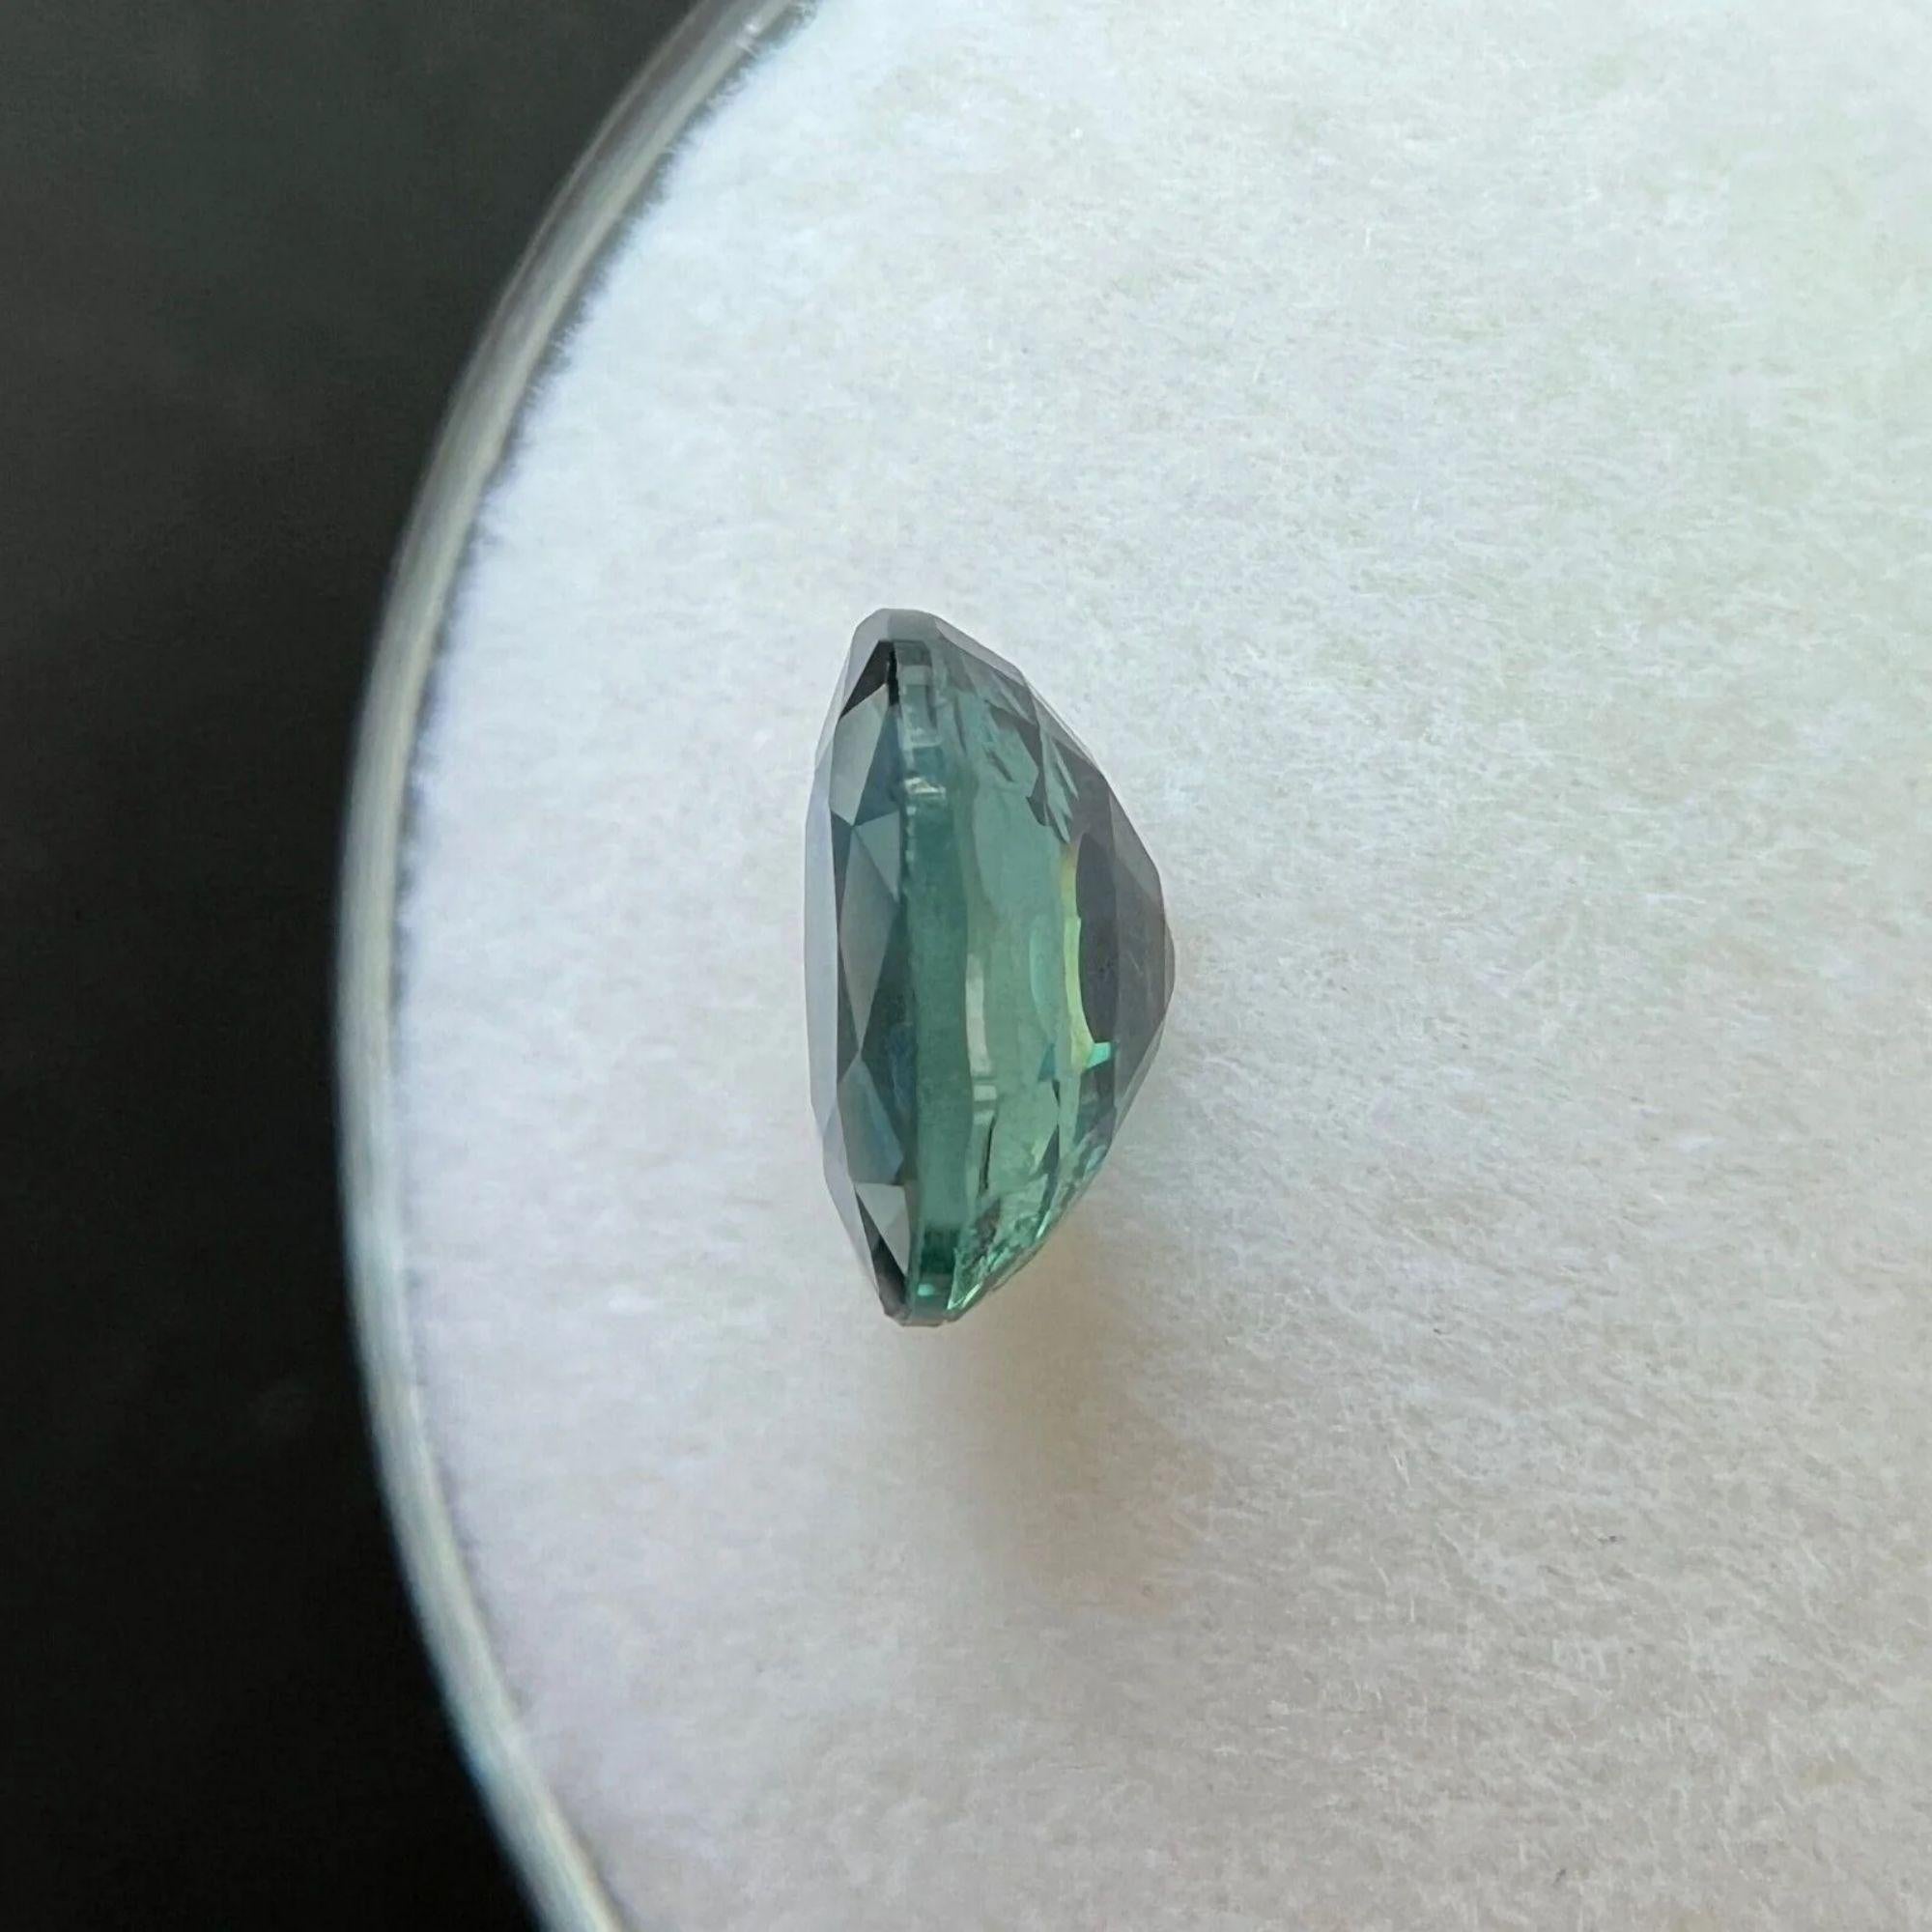 Pierre précieuse rare saphir bleu profond de taille ovale non traitée de 1,14 carat, certifiée GIA en vente 2